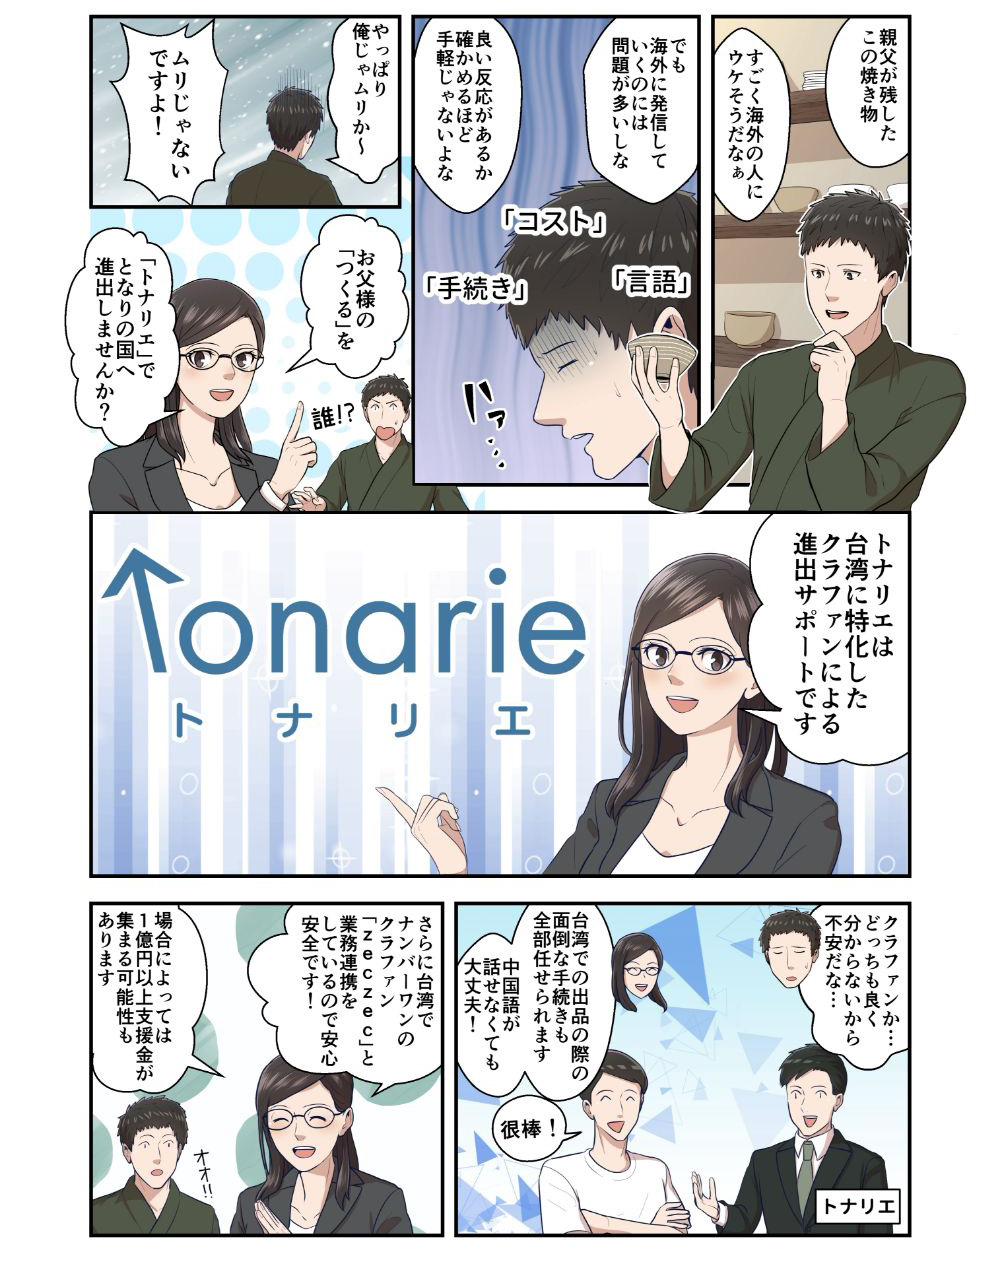 Tonarie(トナリエ)は台湾に特化したクラウドファンディングによる進出サポートです